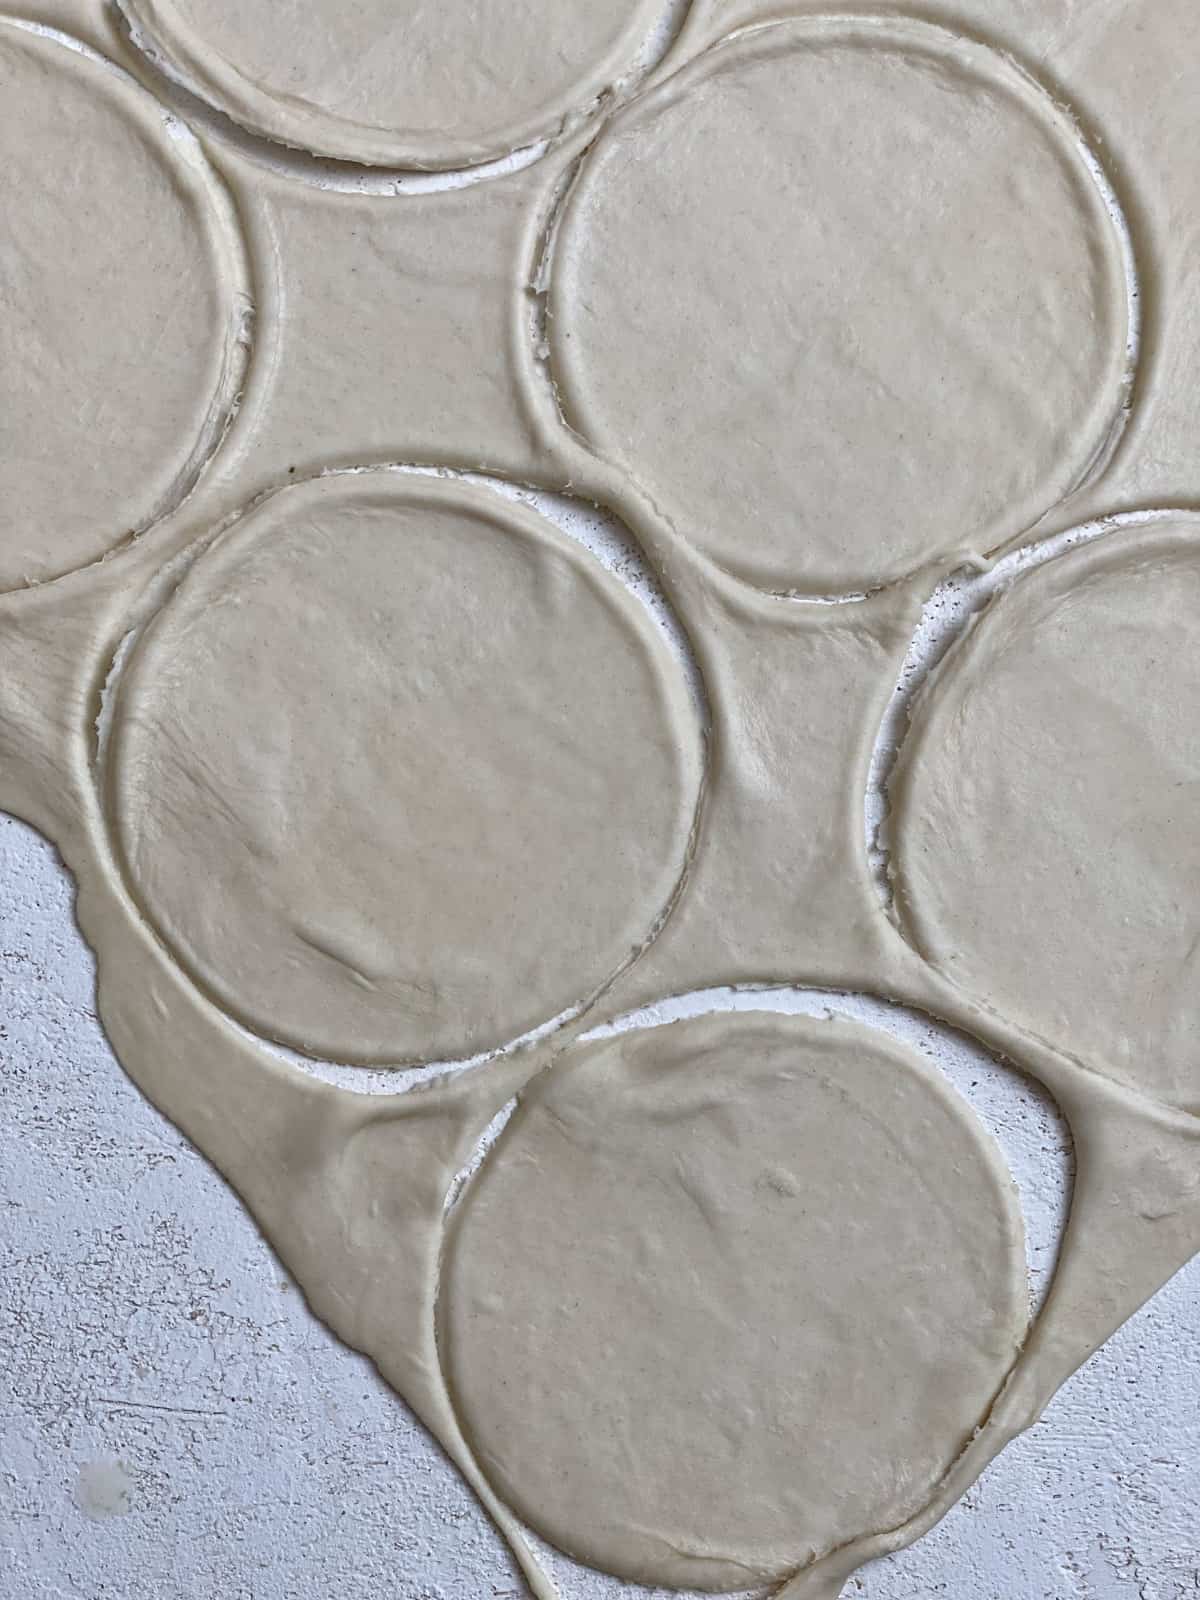 process s،t of making circular pieces of dough